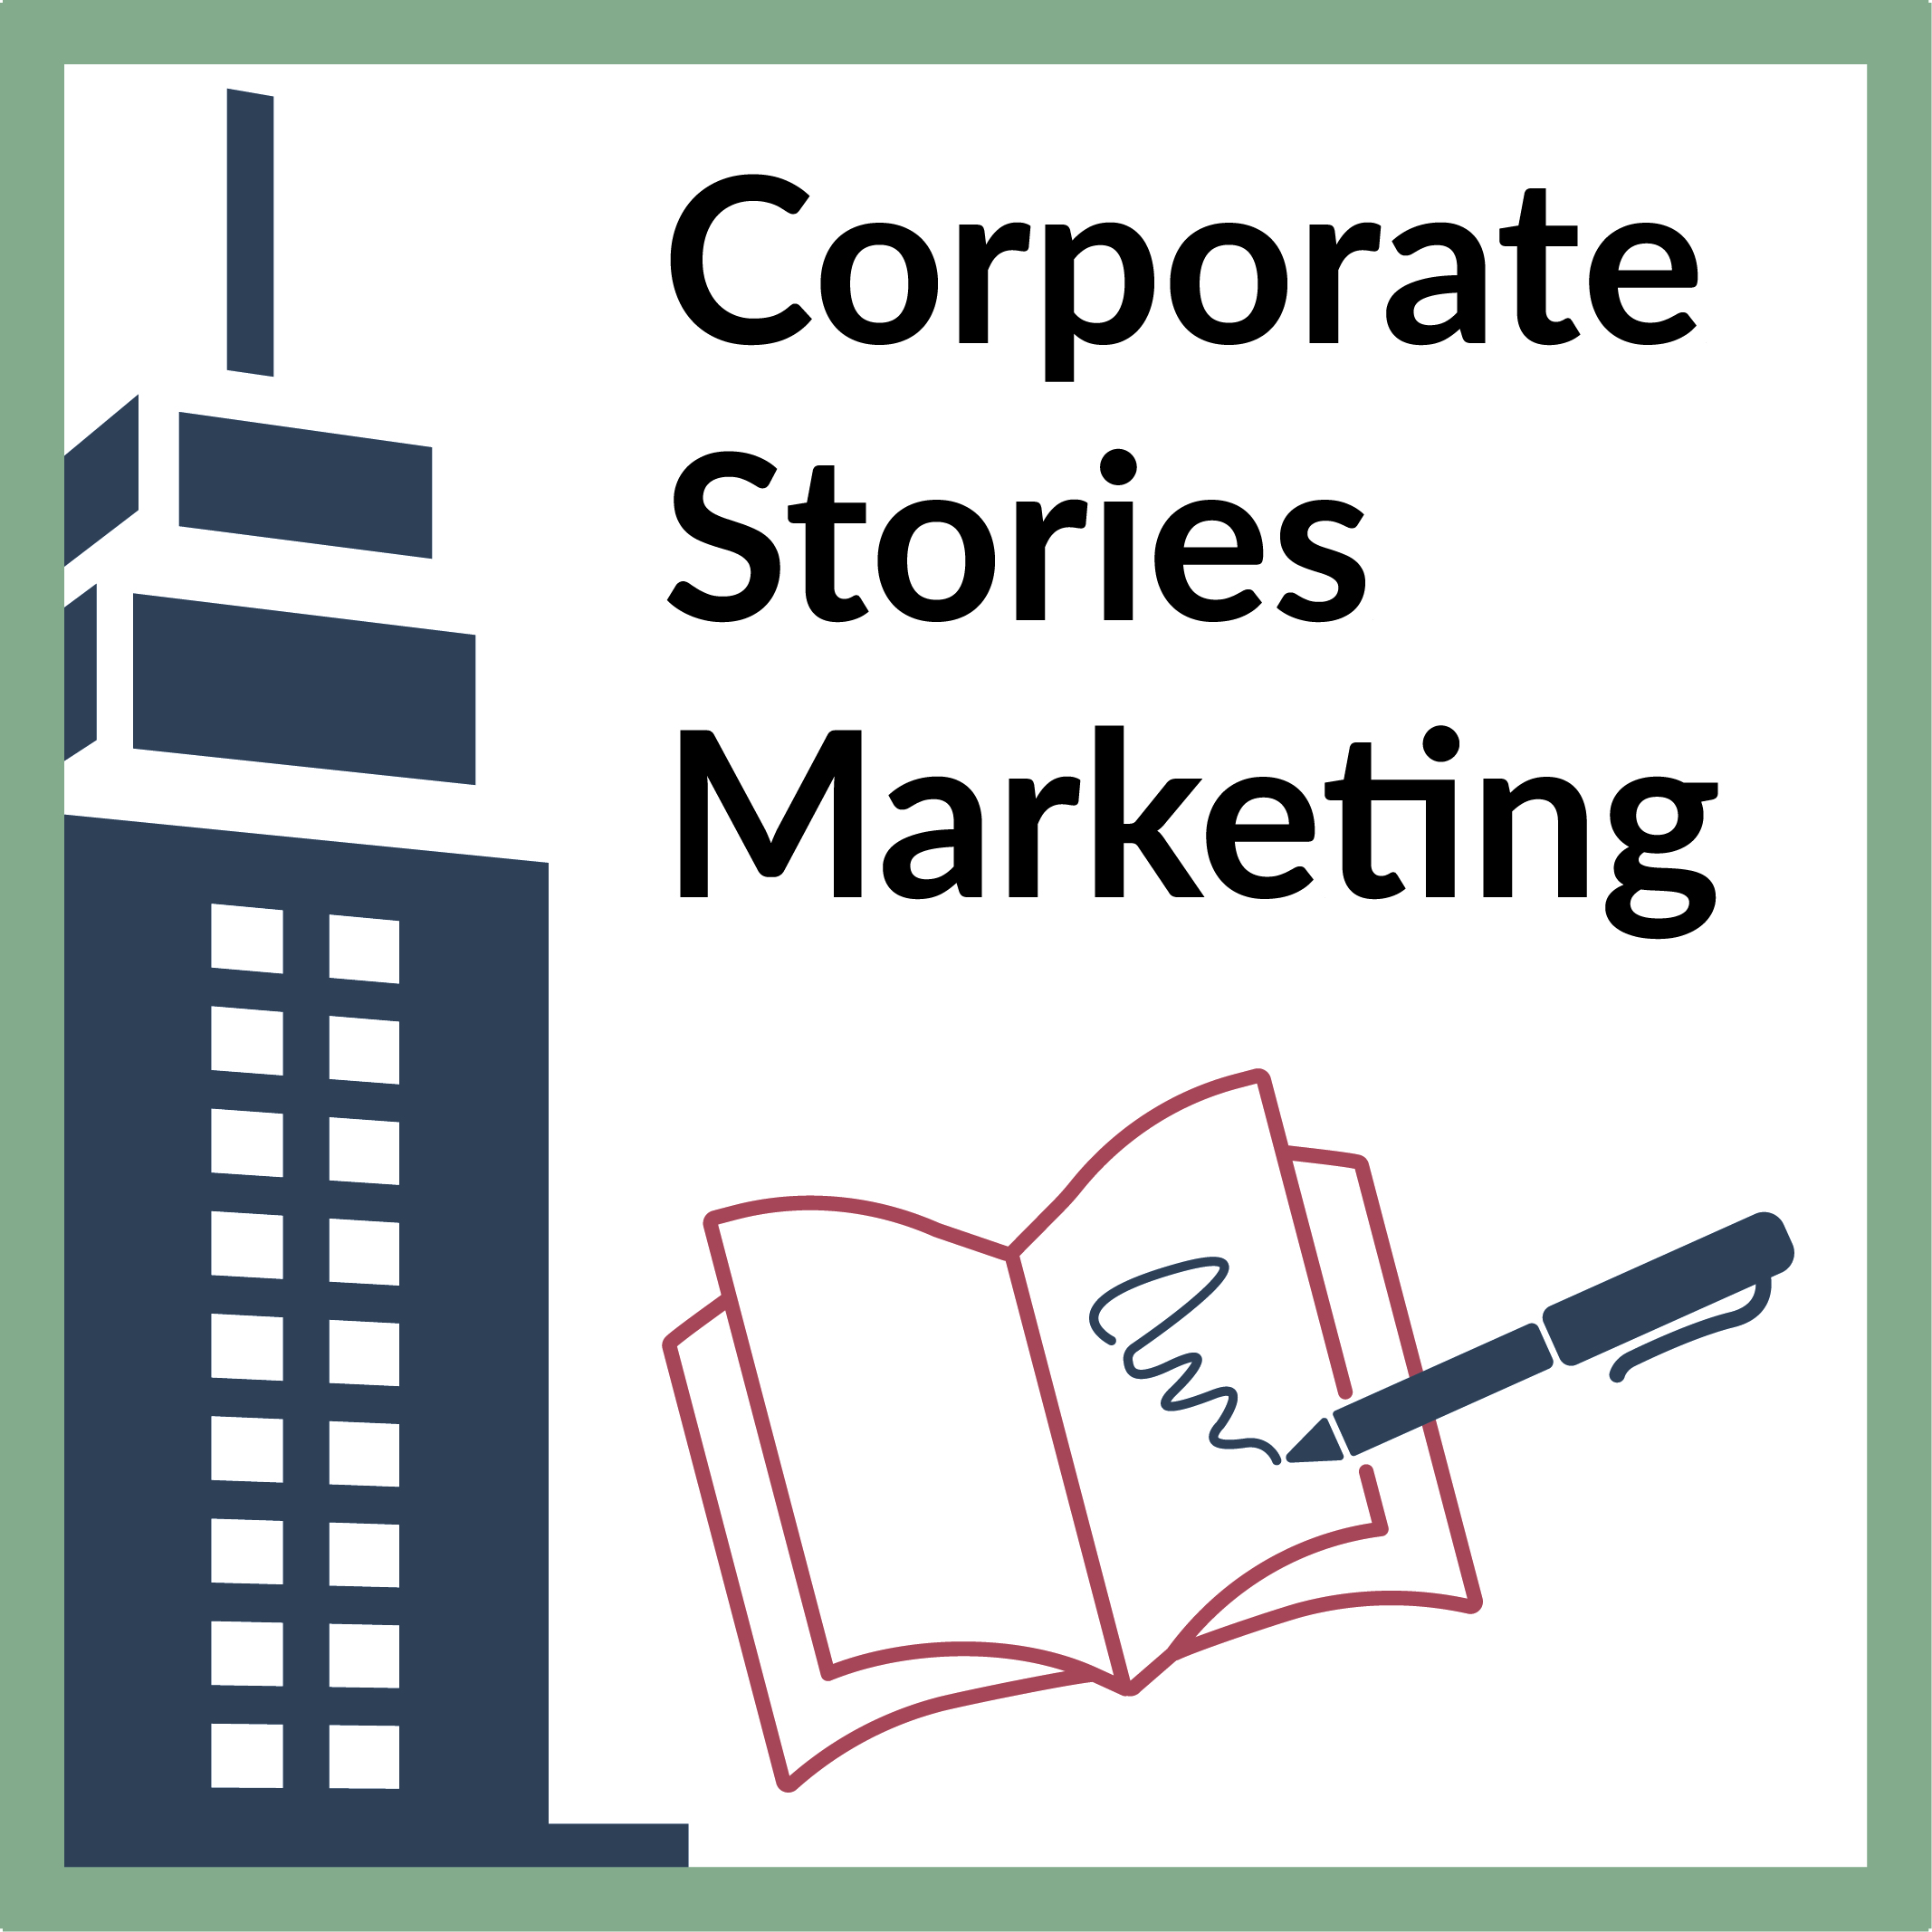 Corporate Stories Marketing